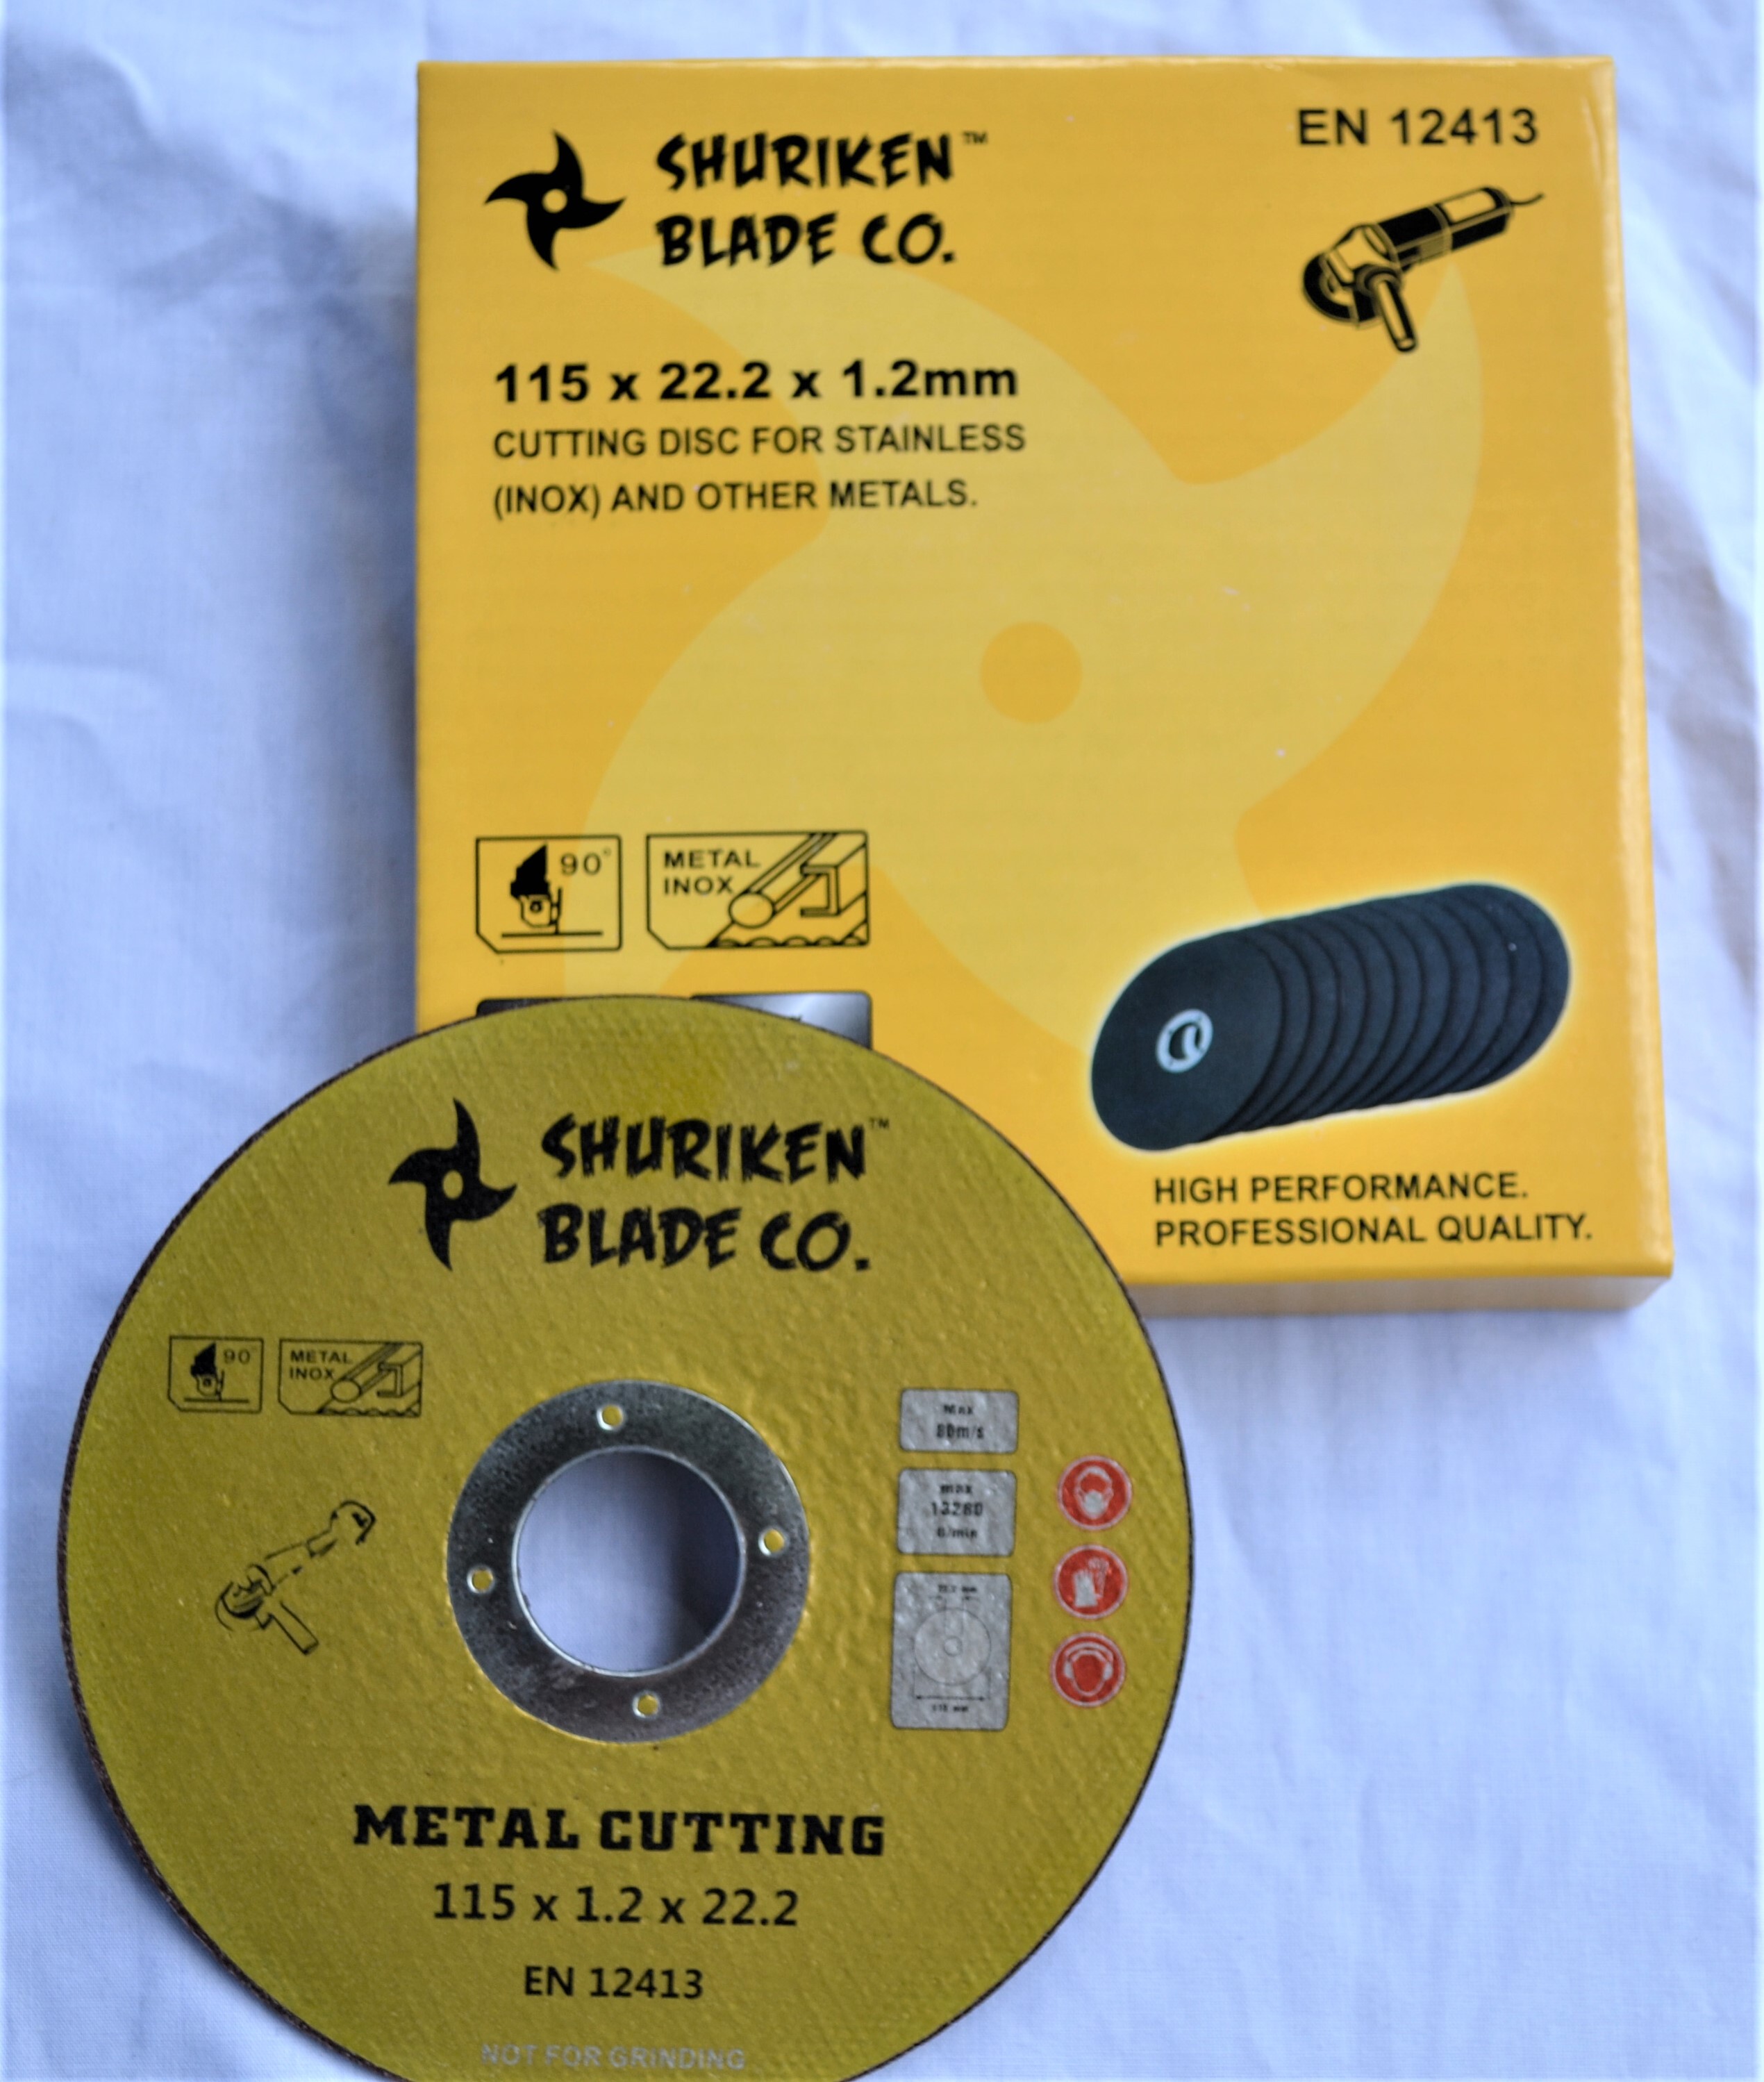 X 1mm fast  stainless 4-1/2" 50 X Metal Cutting/Slitting Disc Ultra Thin 115mm 